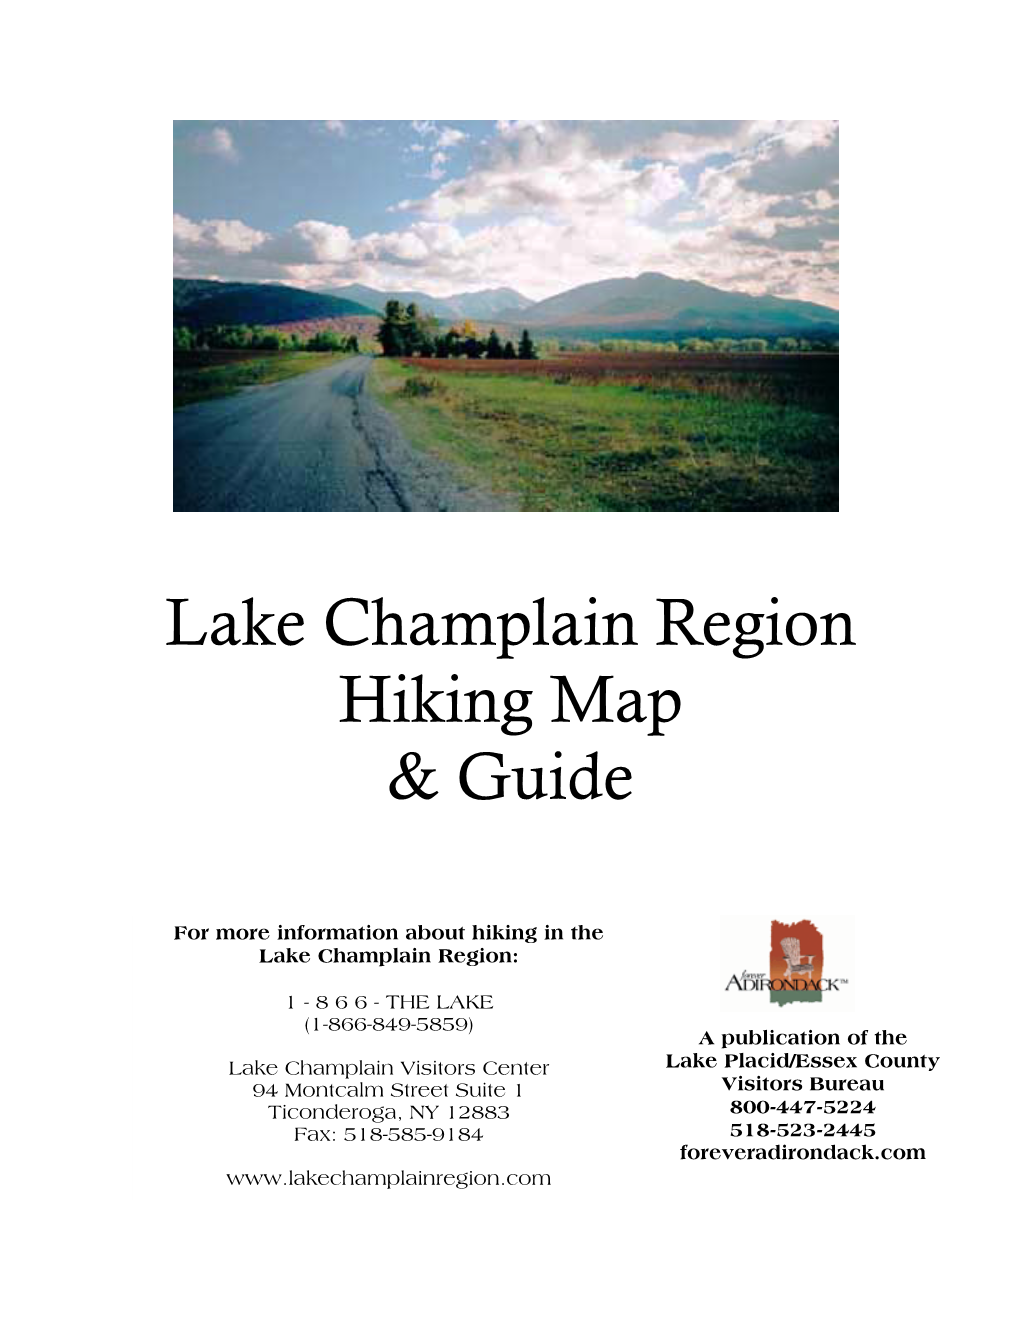 Lake Champlain Region Hiking Map & Guide